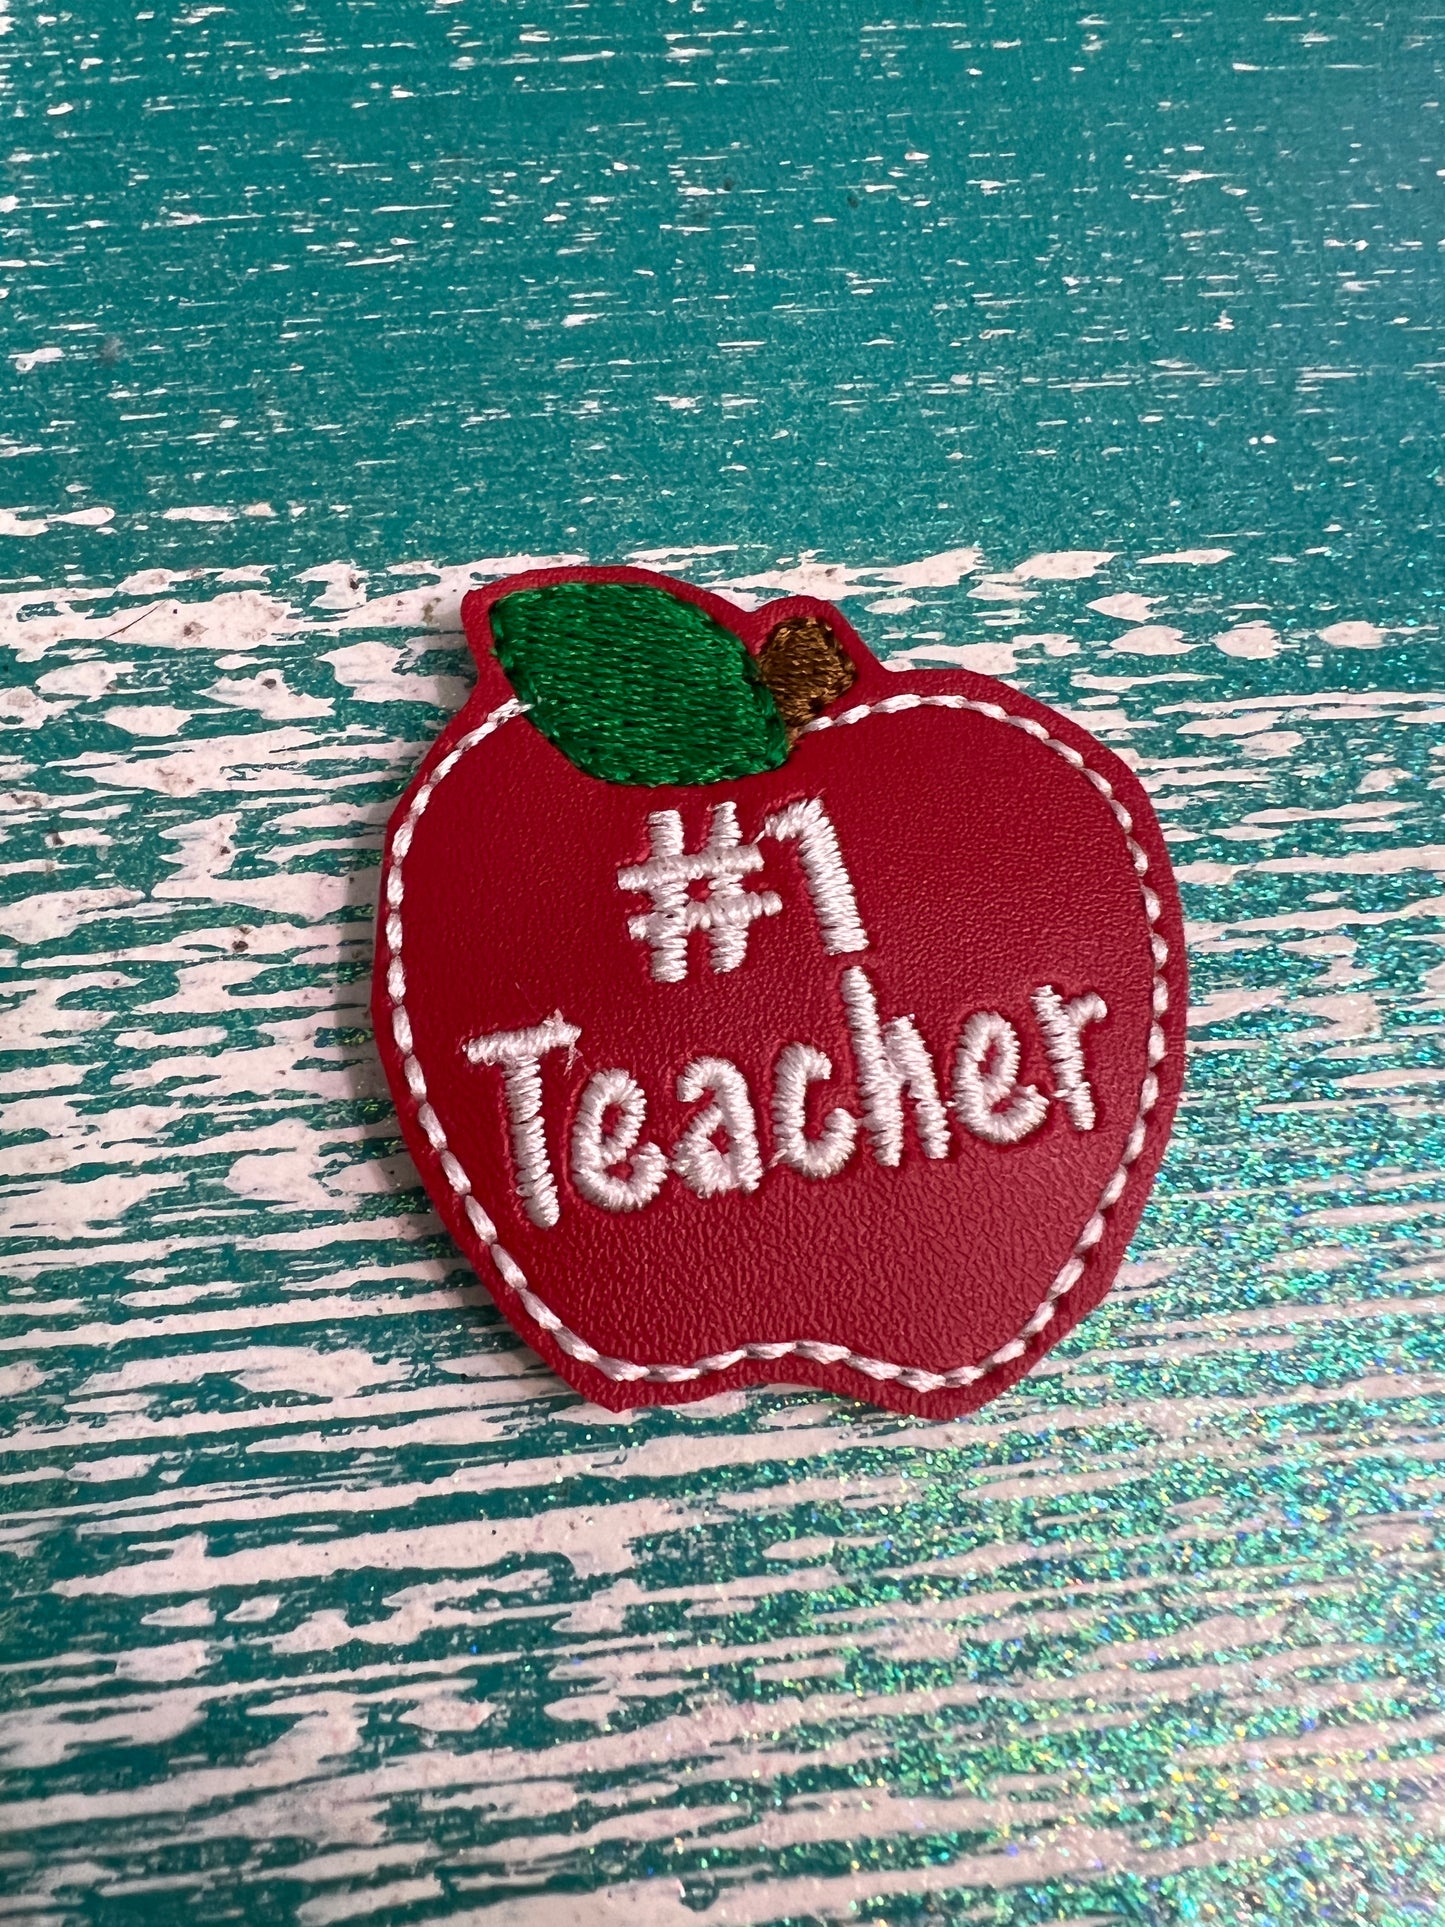 #1 teacher apple